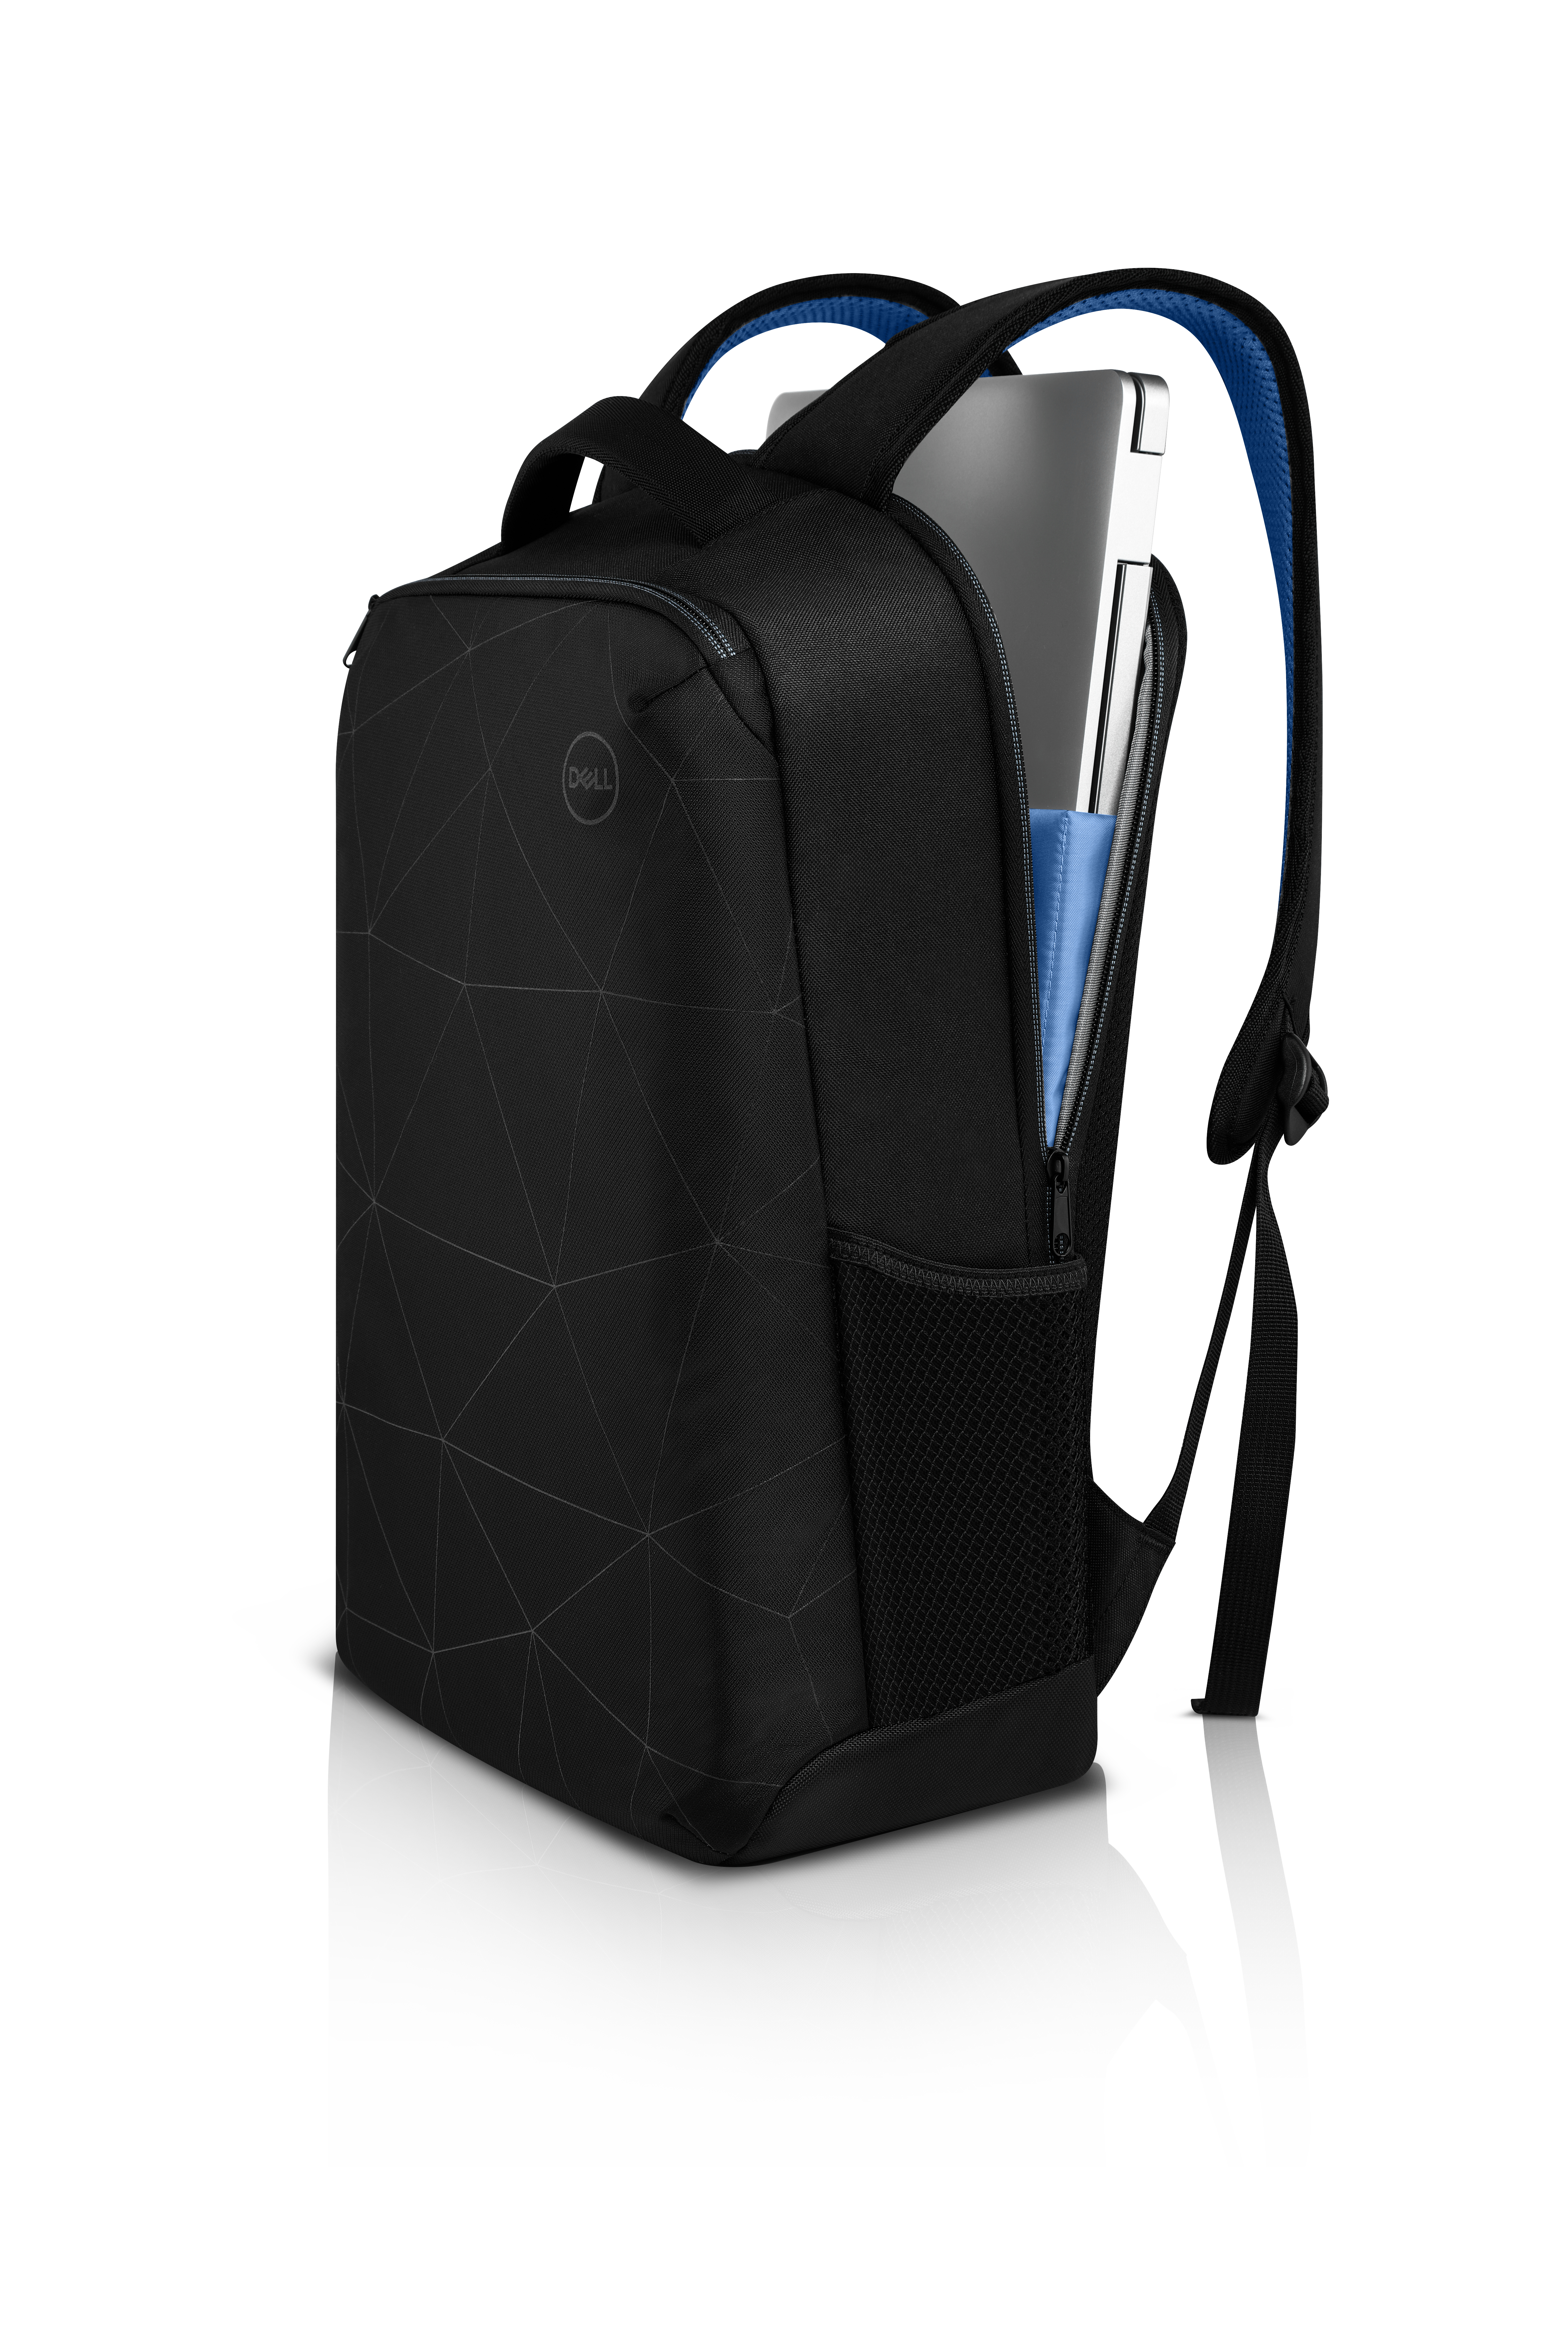 Dell Essential Backpack 15 - Notebook-Rucksack - 38.1 cm